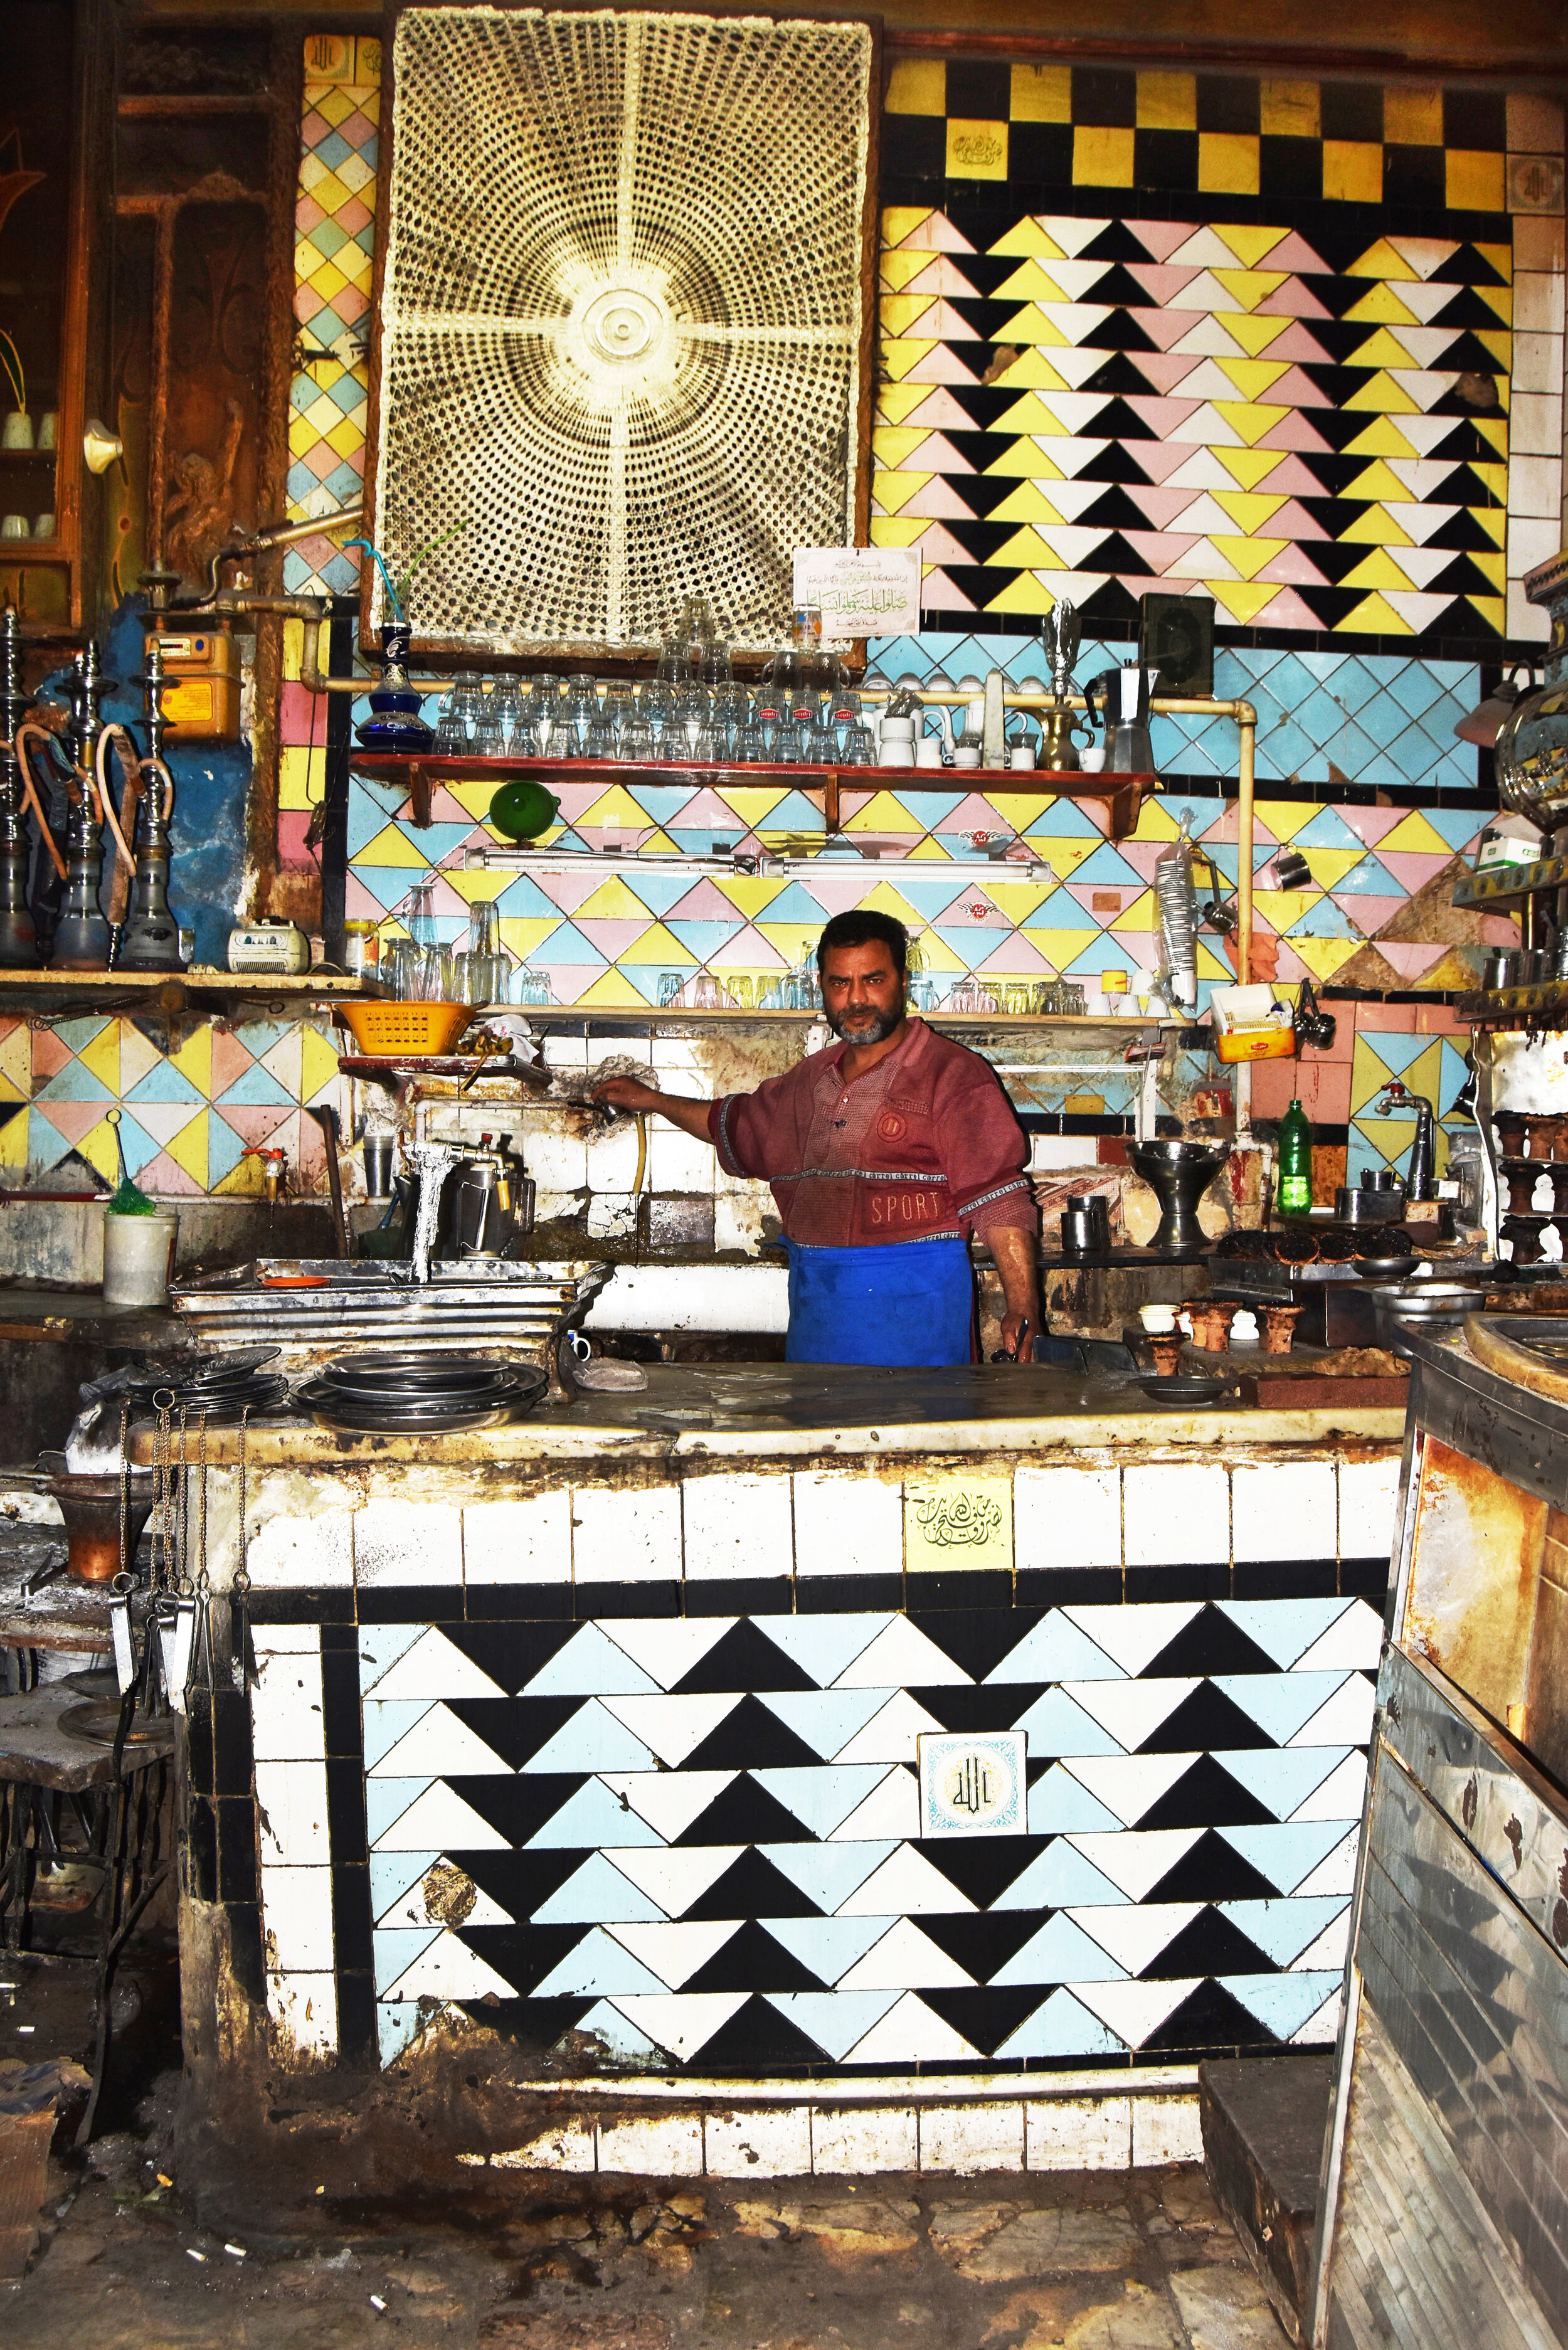  El-Shams Cafe in Cairo, Egypt. 